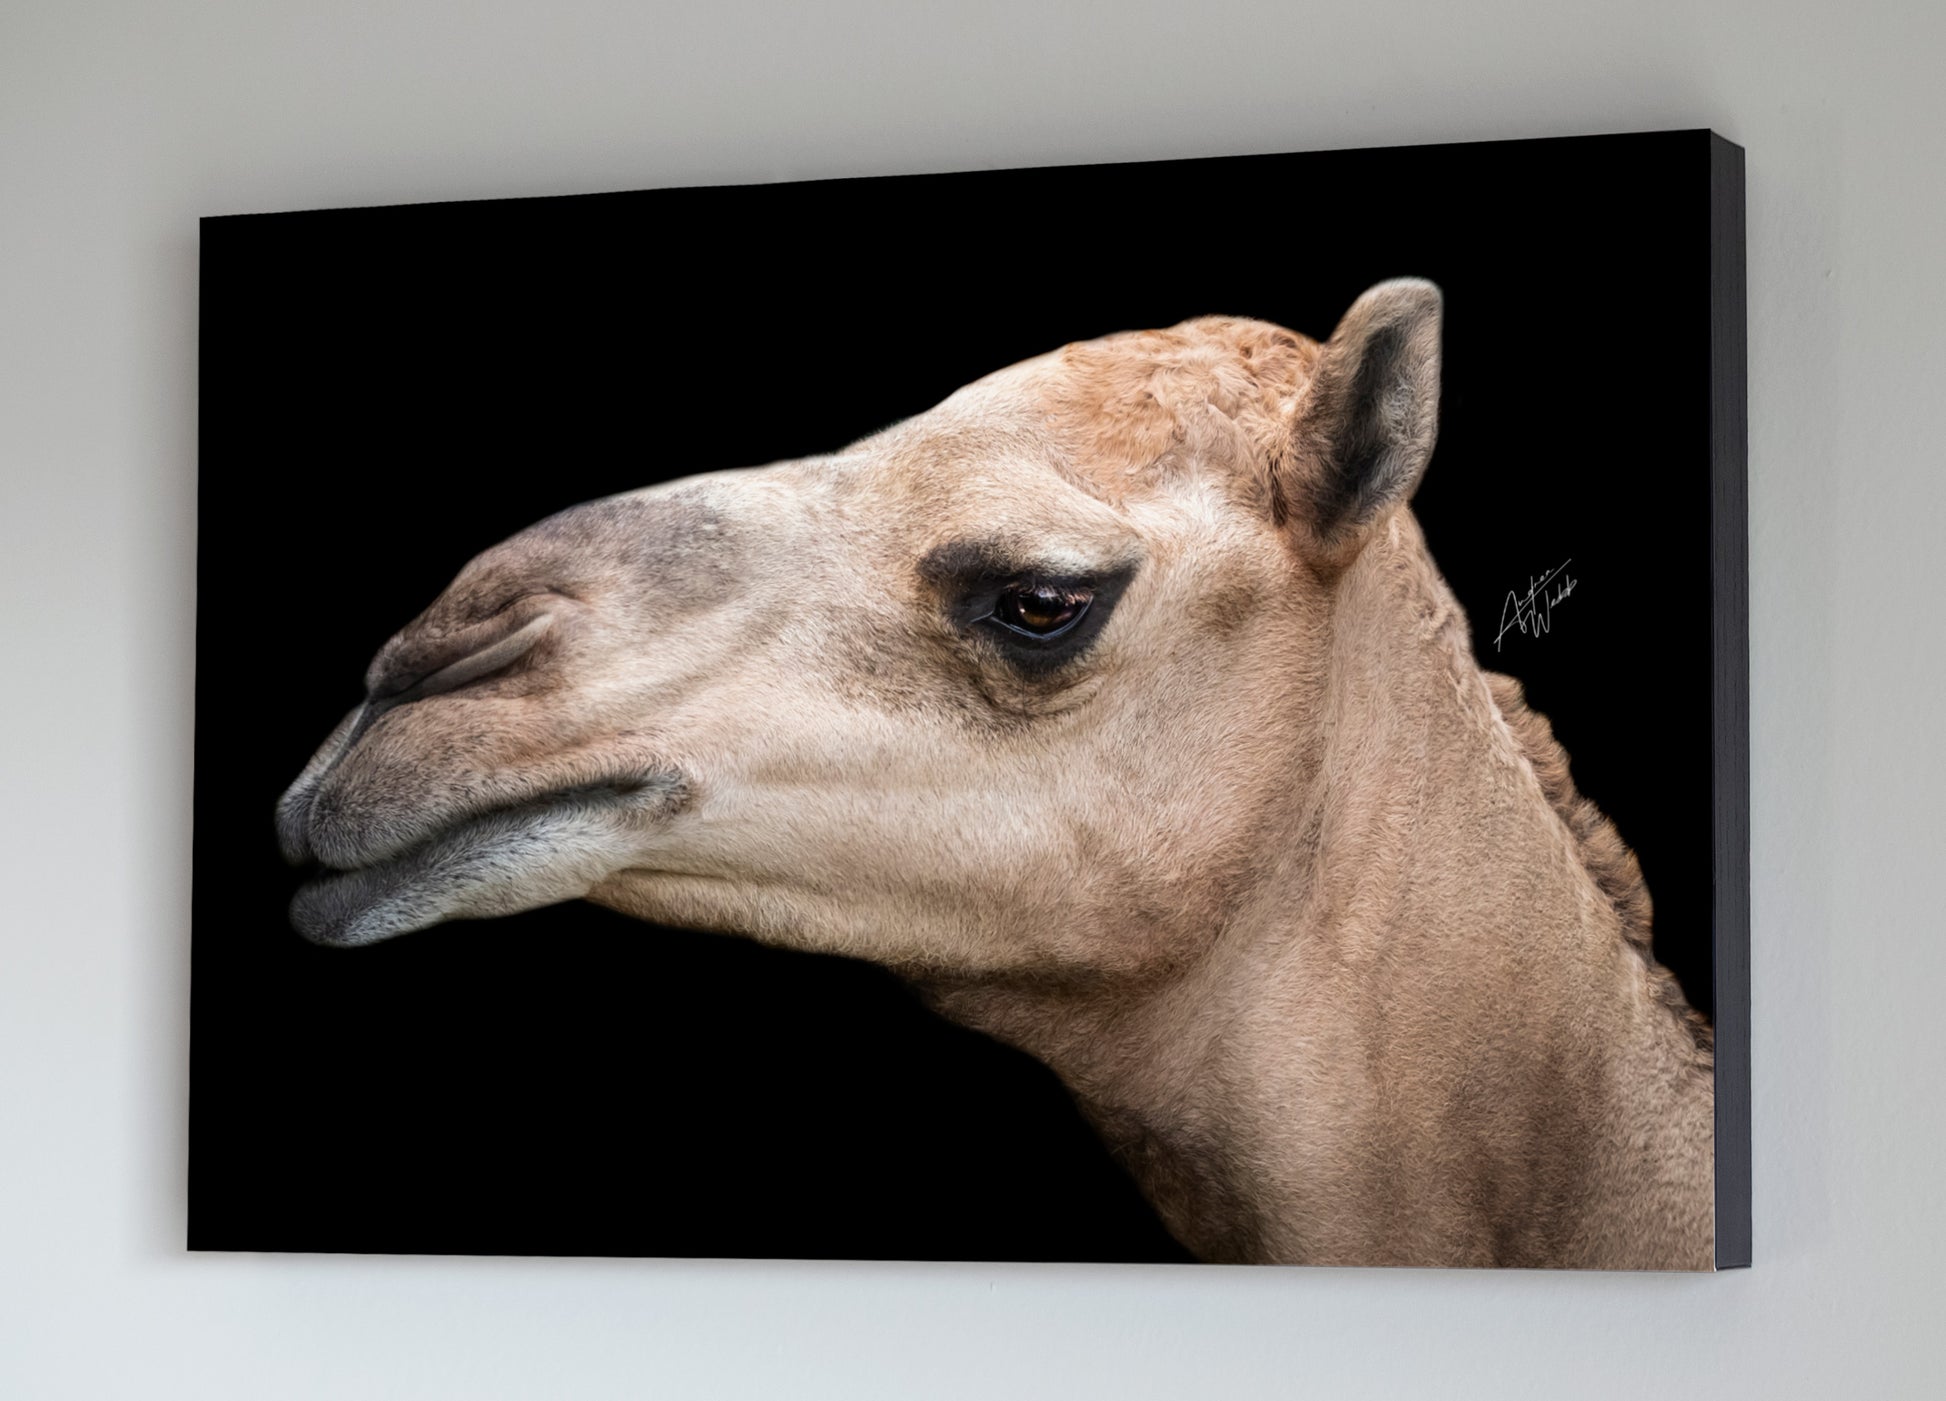 A fine art portrait of a camel face up close on black background portrait. Animal photography. Camel photography. Camel prints. Camel Canvases. Camel Art. Camel wall art. Camel gifts.